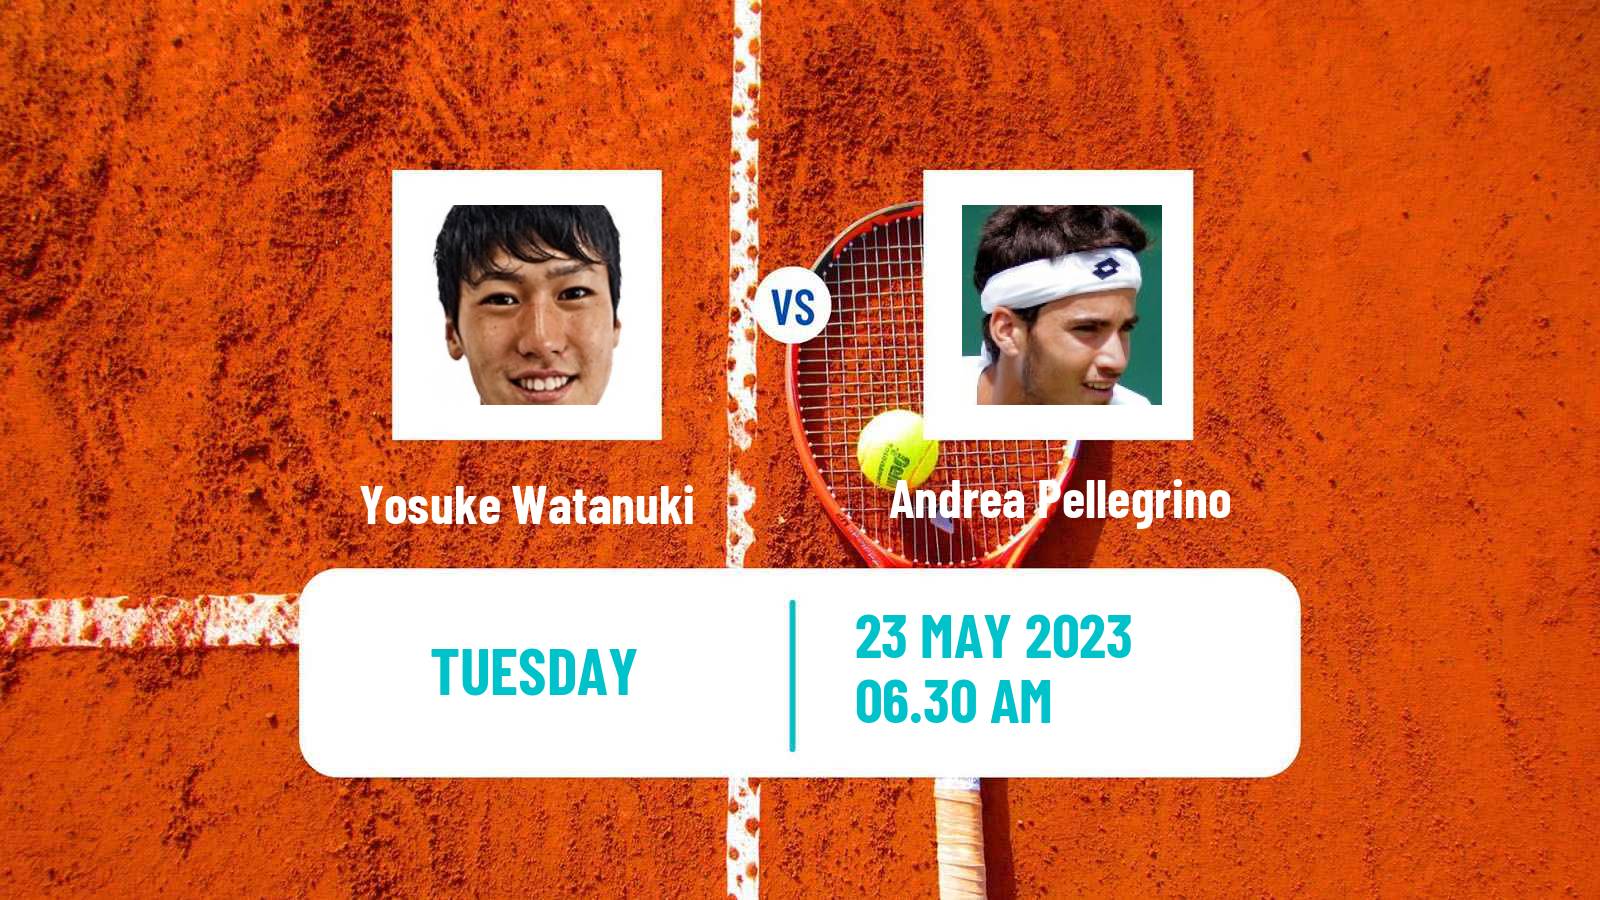 Tennis ATP Roland Garros Yosuke Watanuki - Andrea Pellegrino